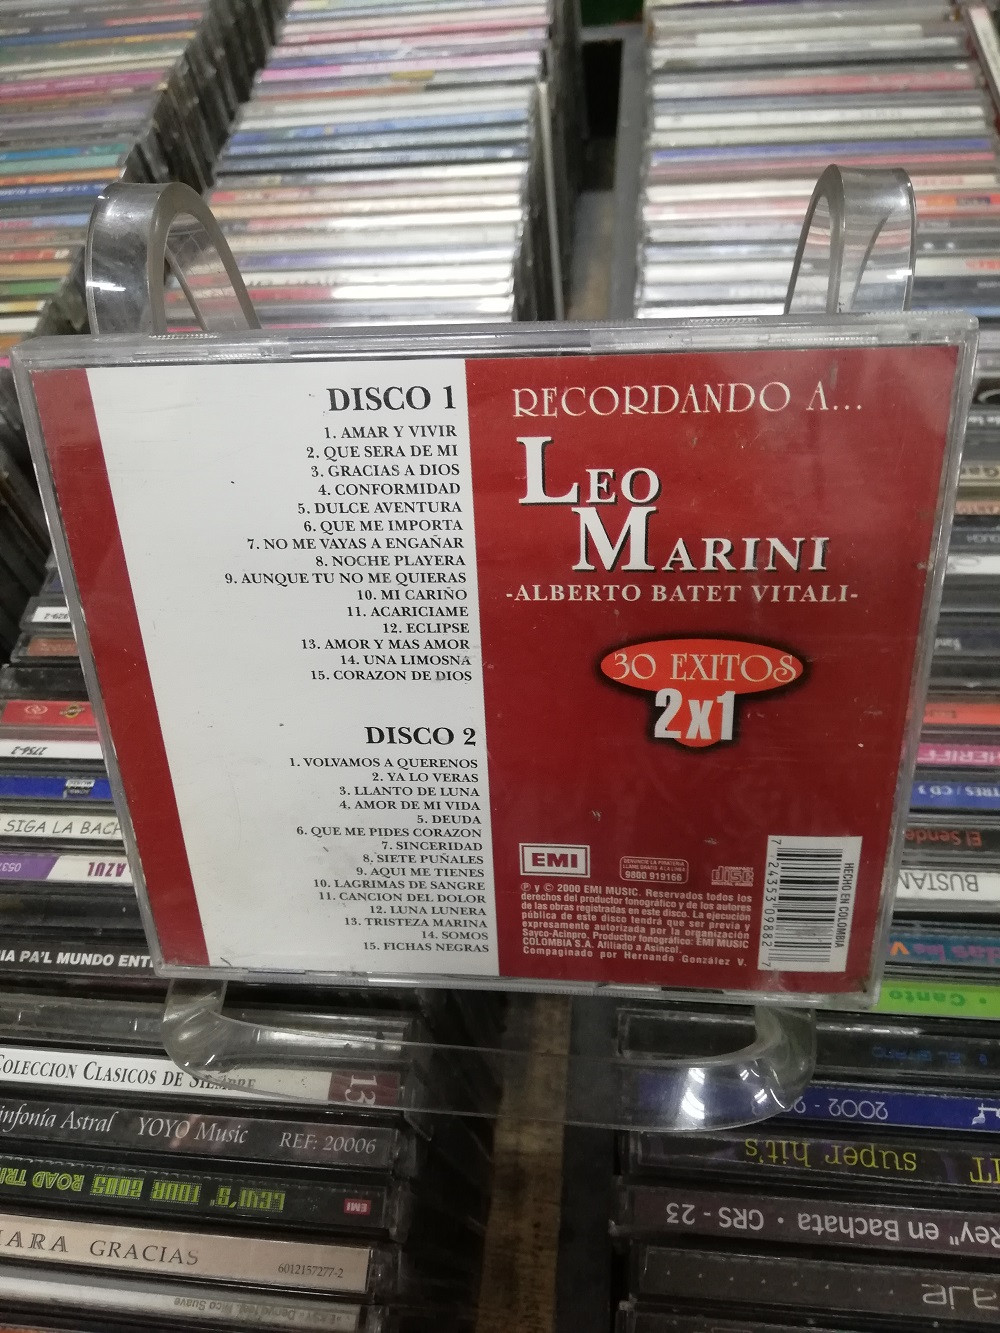 Imagen CD DOBLE LEO MARINI CON LA ORQUESTA "DON AMERICO Y SUS CARIBES" - RECORDANDO 2